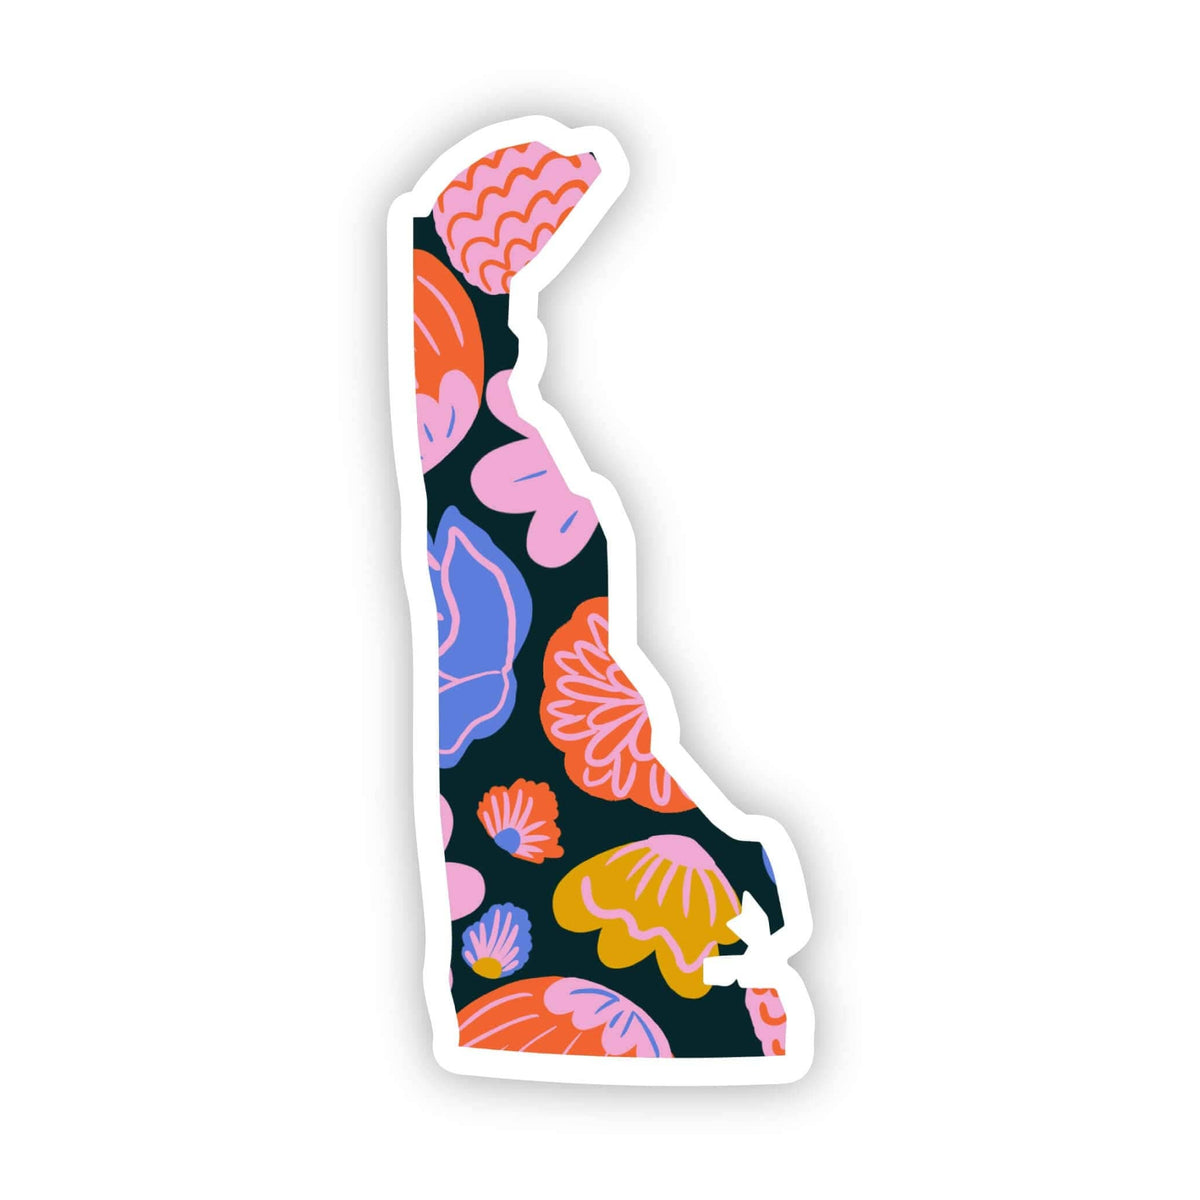 Delaware Sticker - Colorful Flower